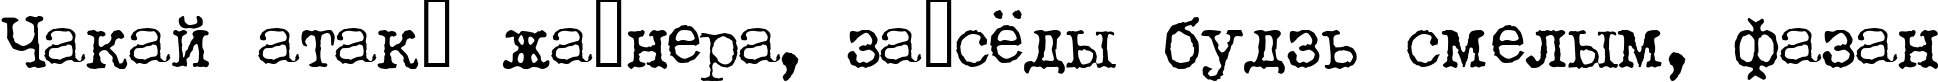 Пример написания шрифтом LetteraTrentadue текста на белорусском